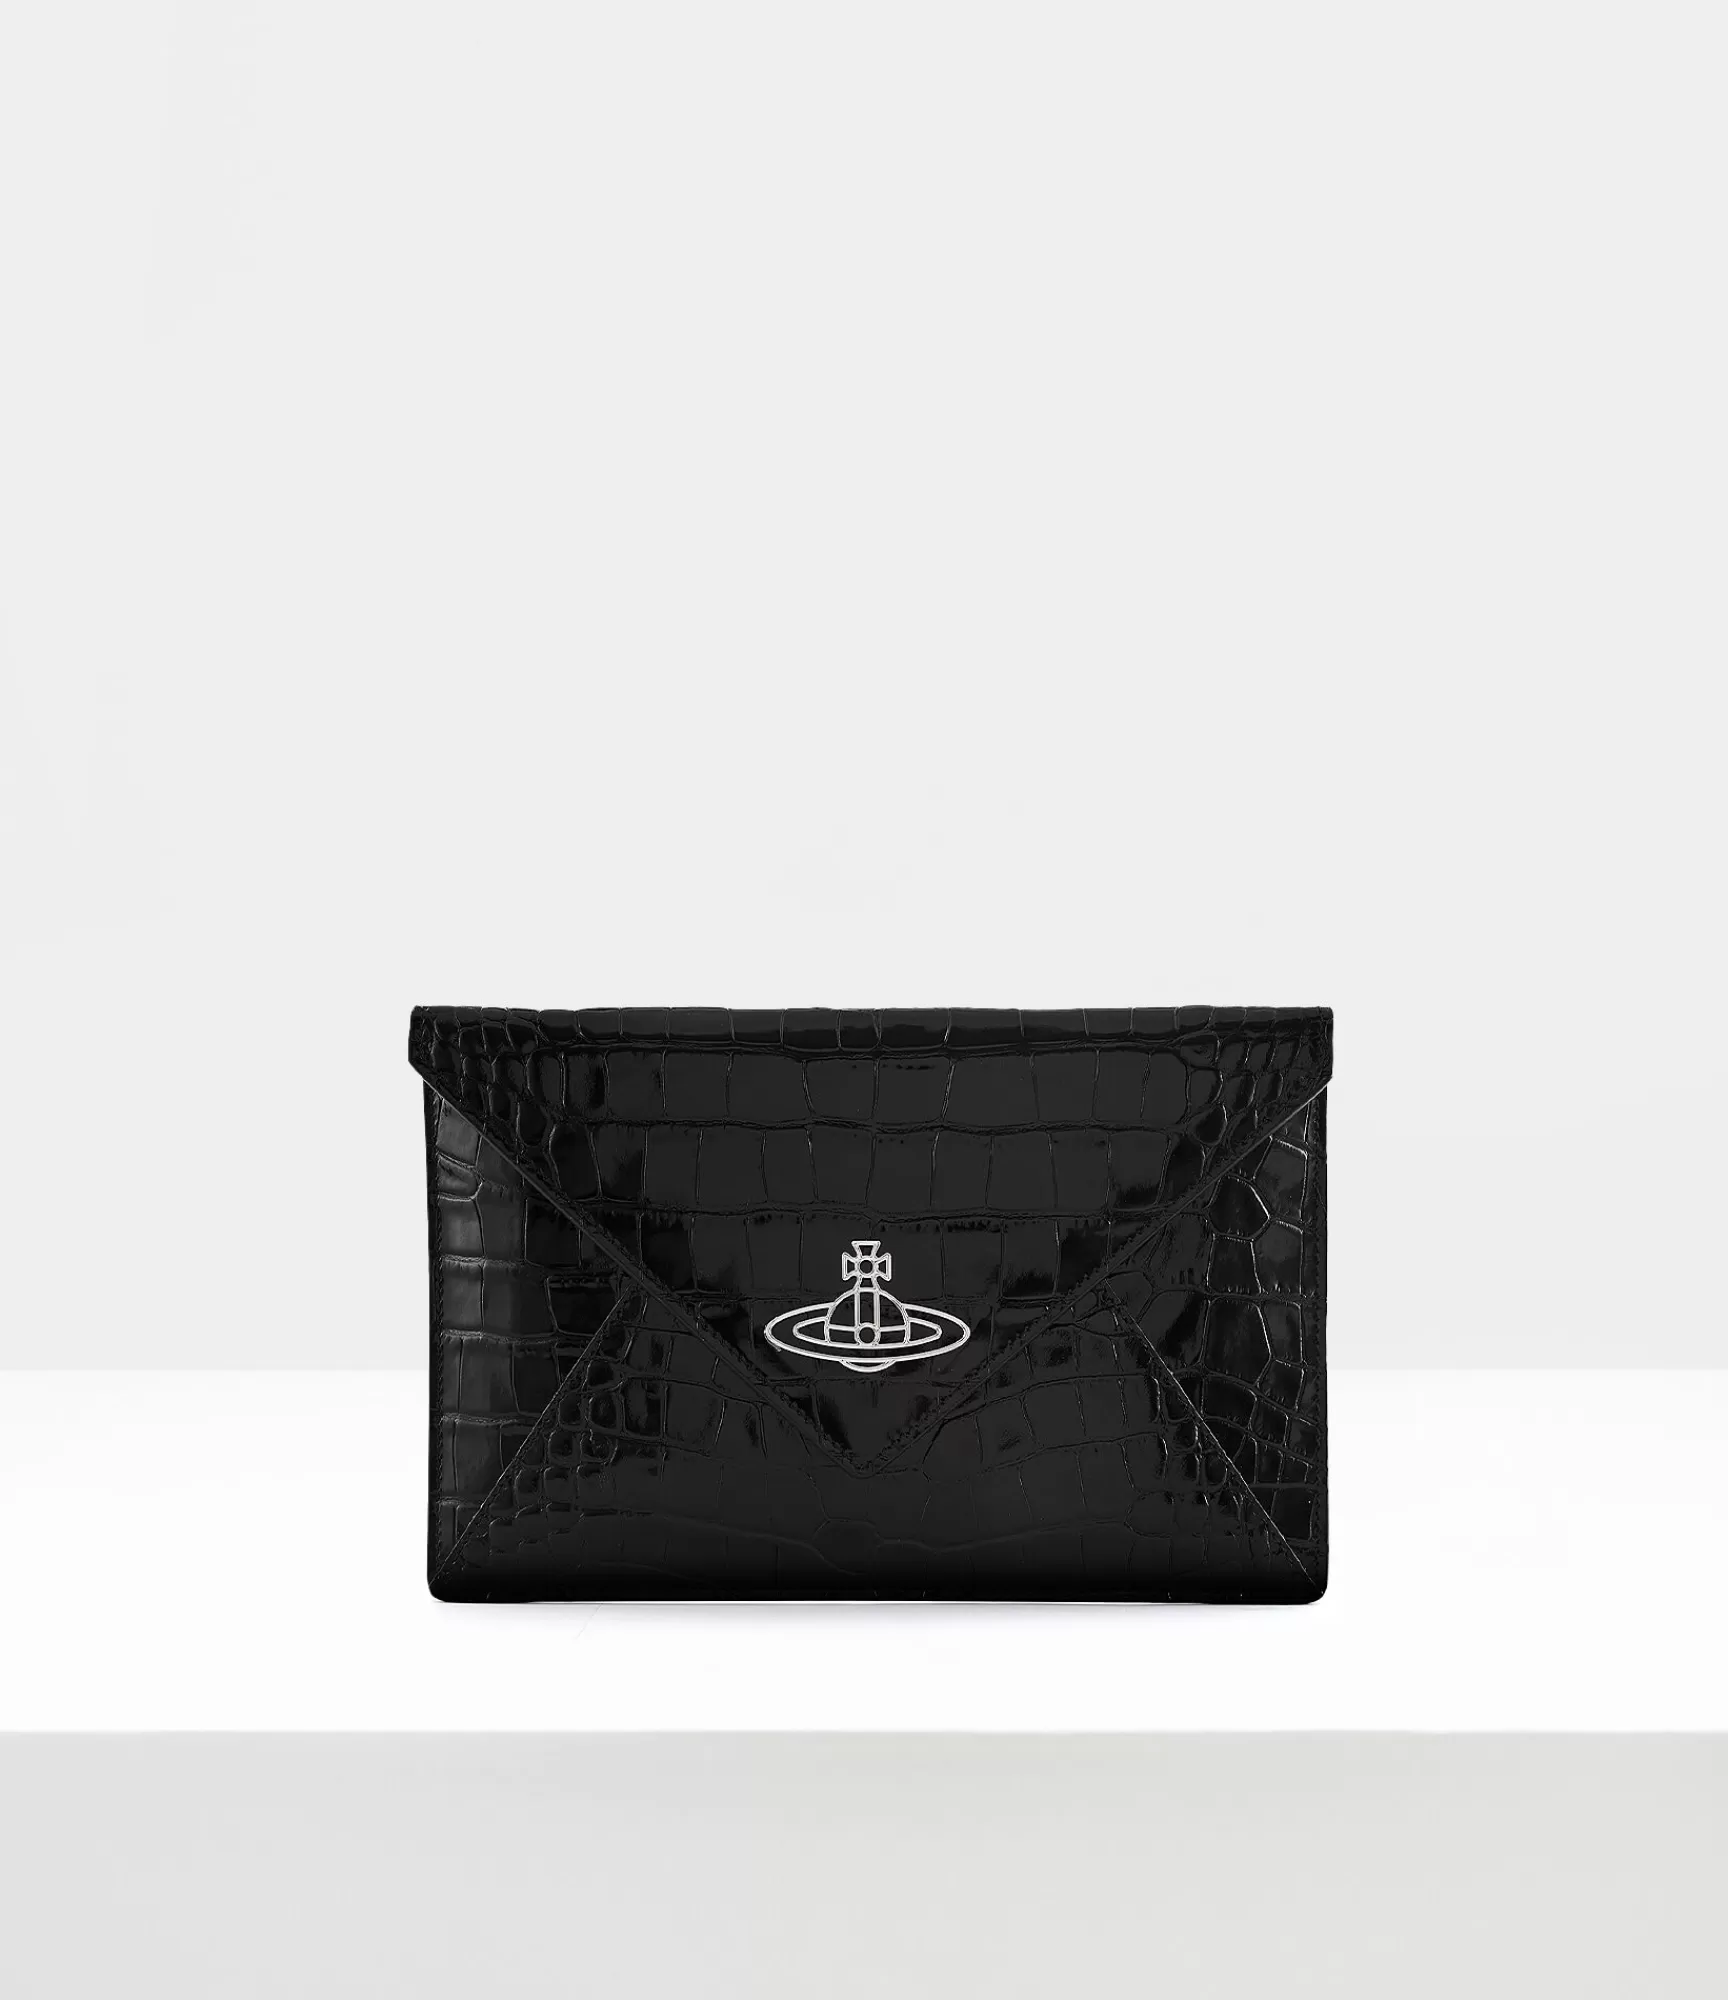 Vivienne Westwood Clutches*Envelope clutch Black